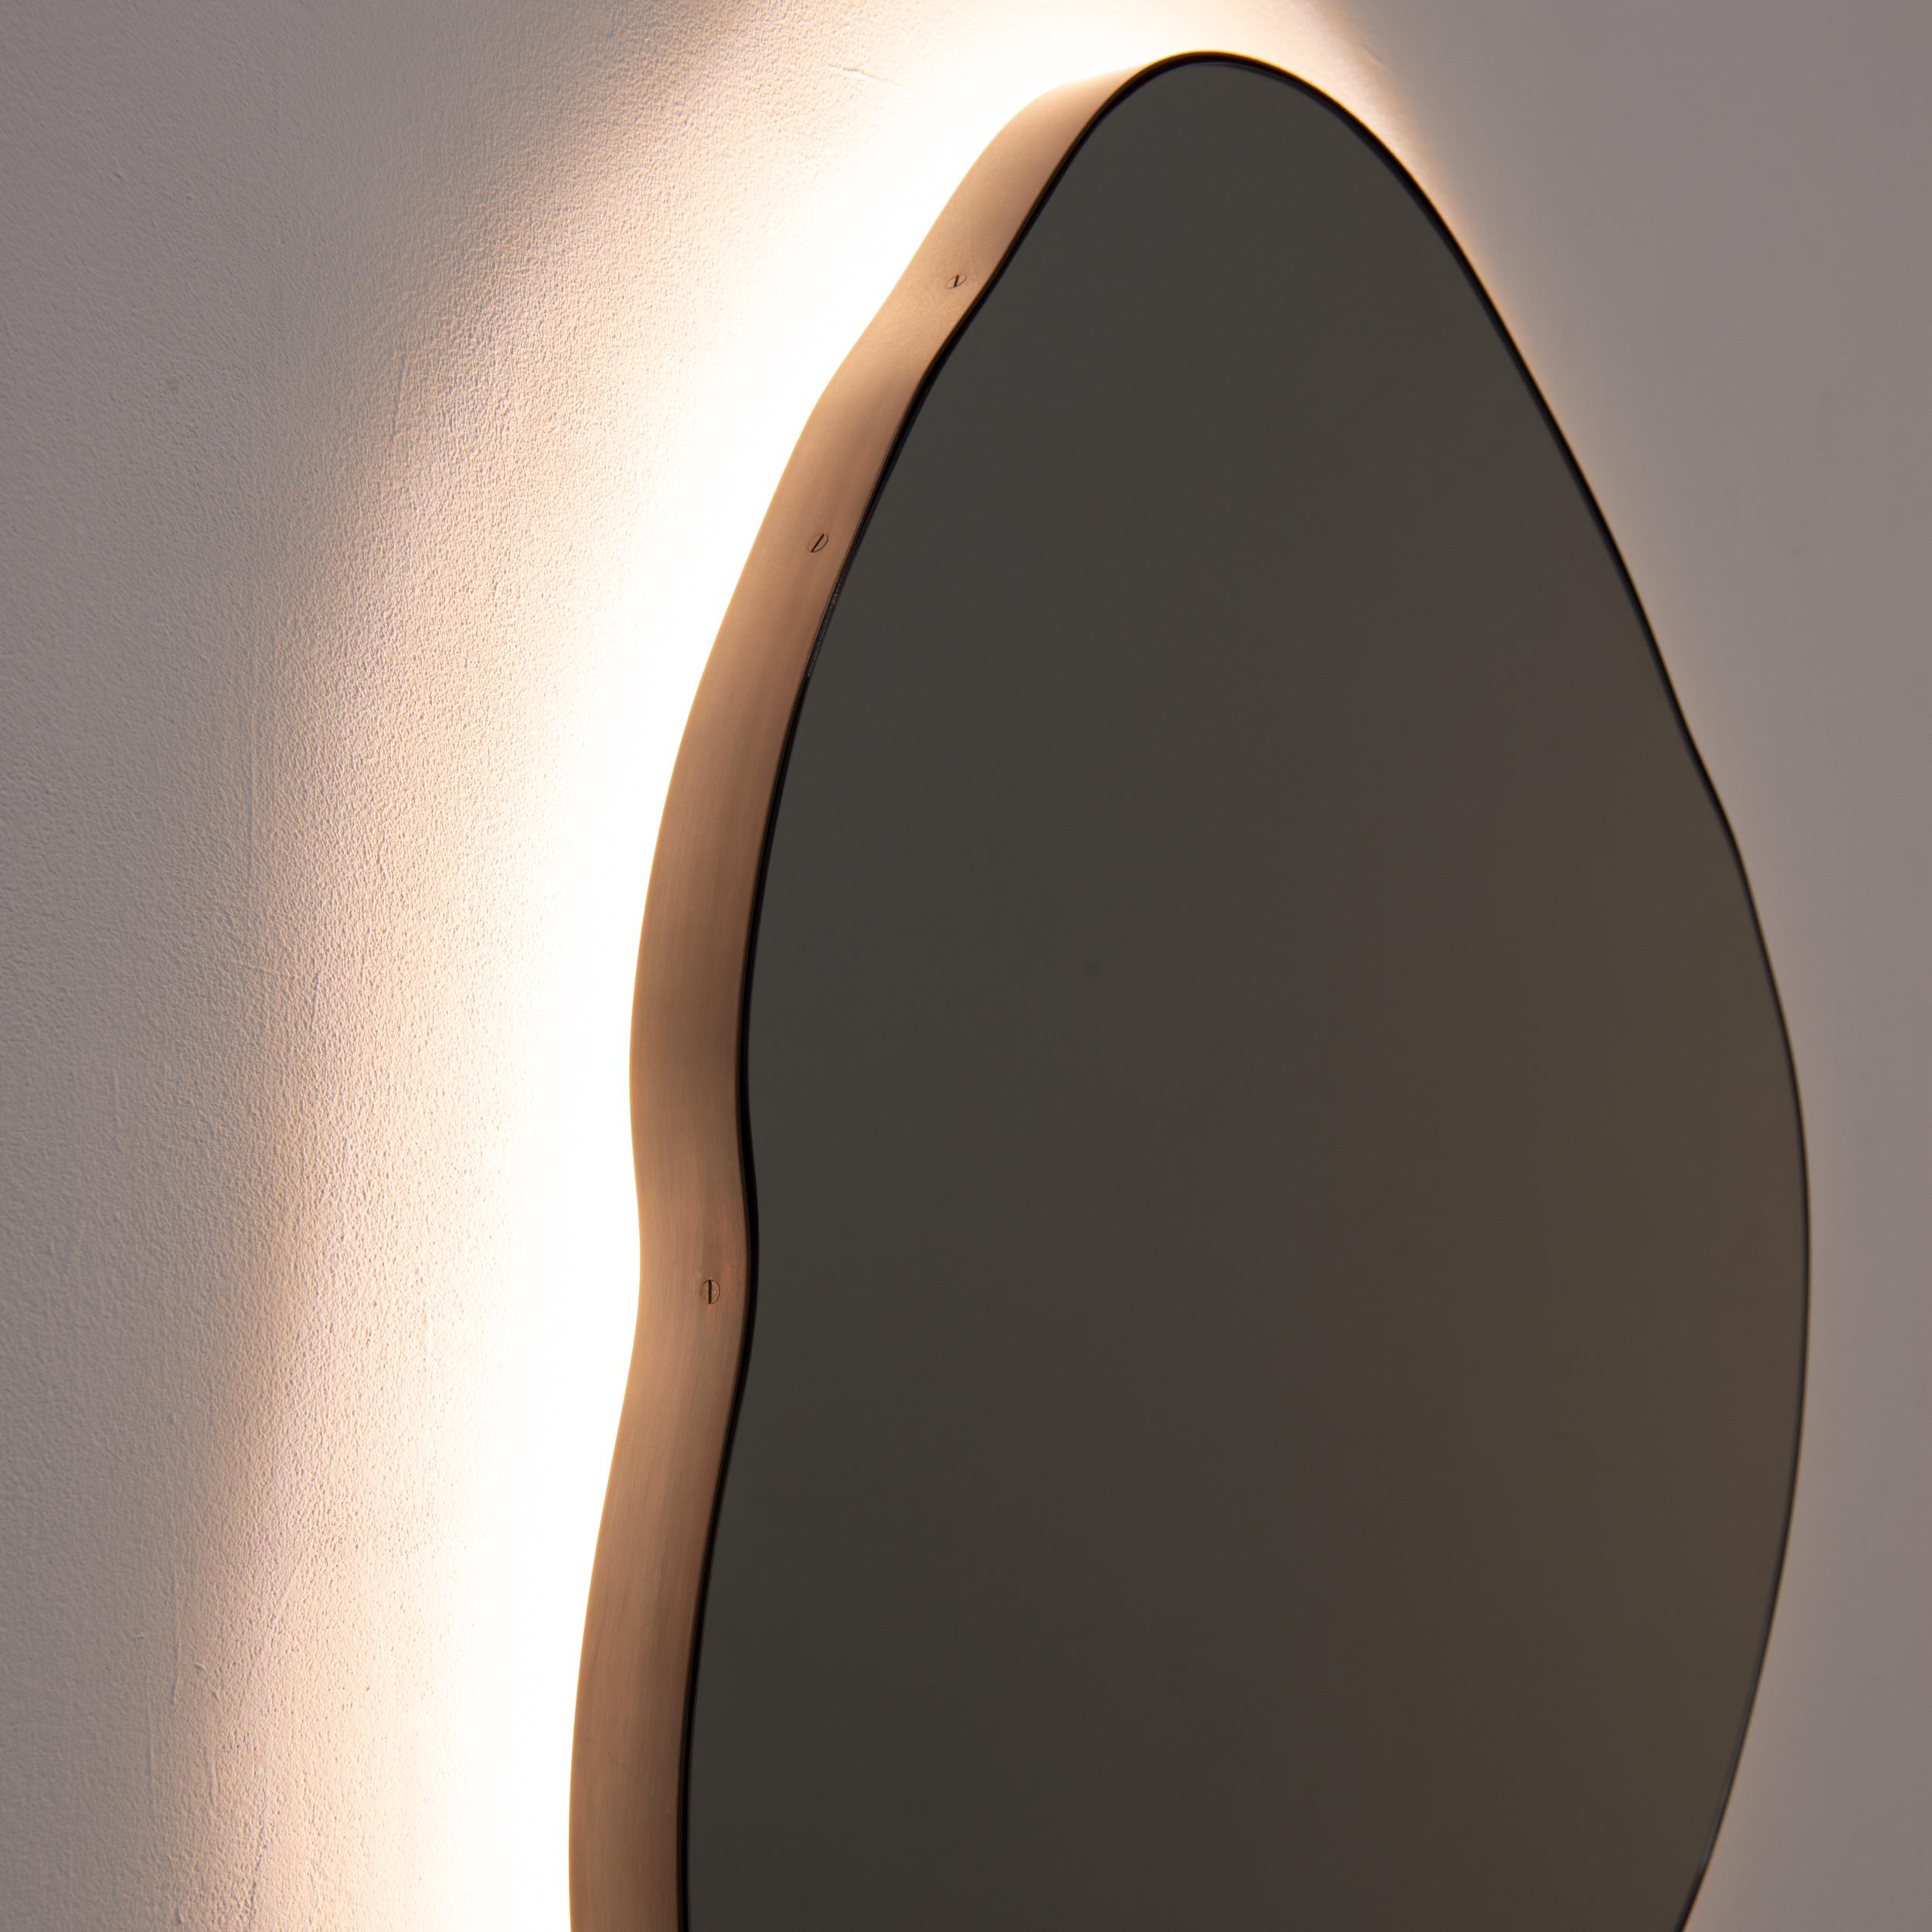 Ergon Organic Shape beleuchteter, schwarz getönter Spiegel, Rahmen Bronze Patina, Medium (Bronziert) im Angebot